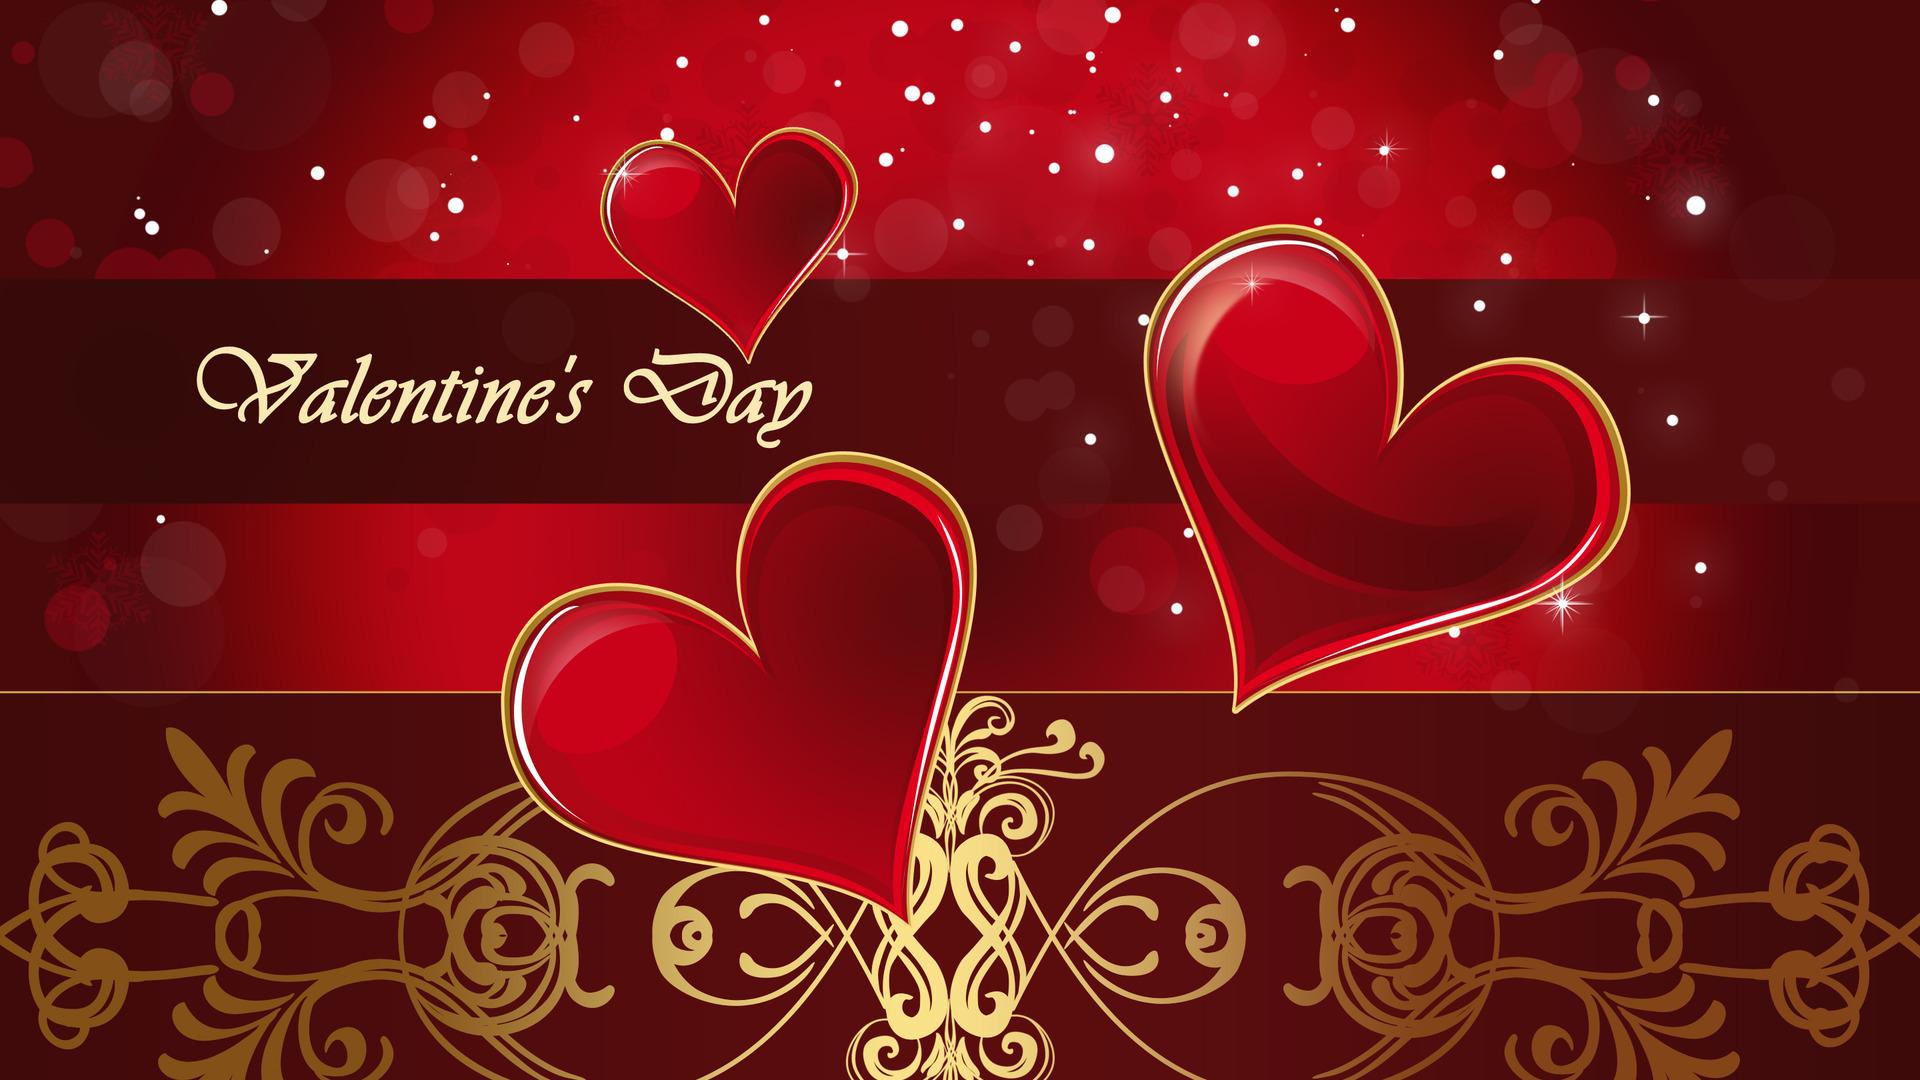 Advance Feb Happy Valentines Day Whatsapp Dp Image